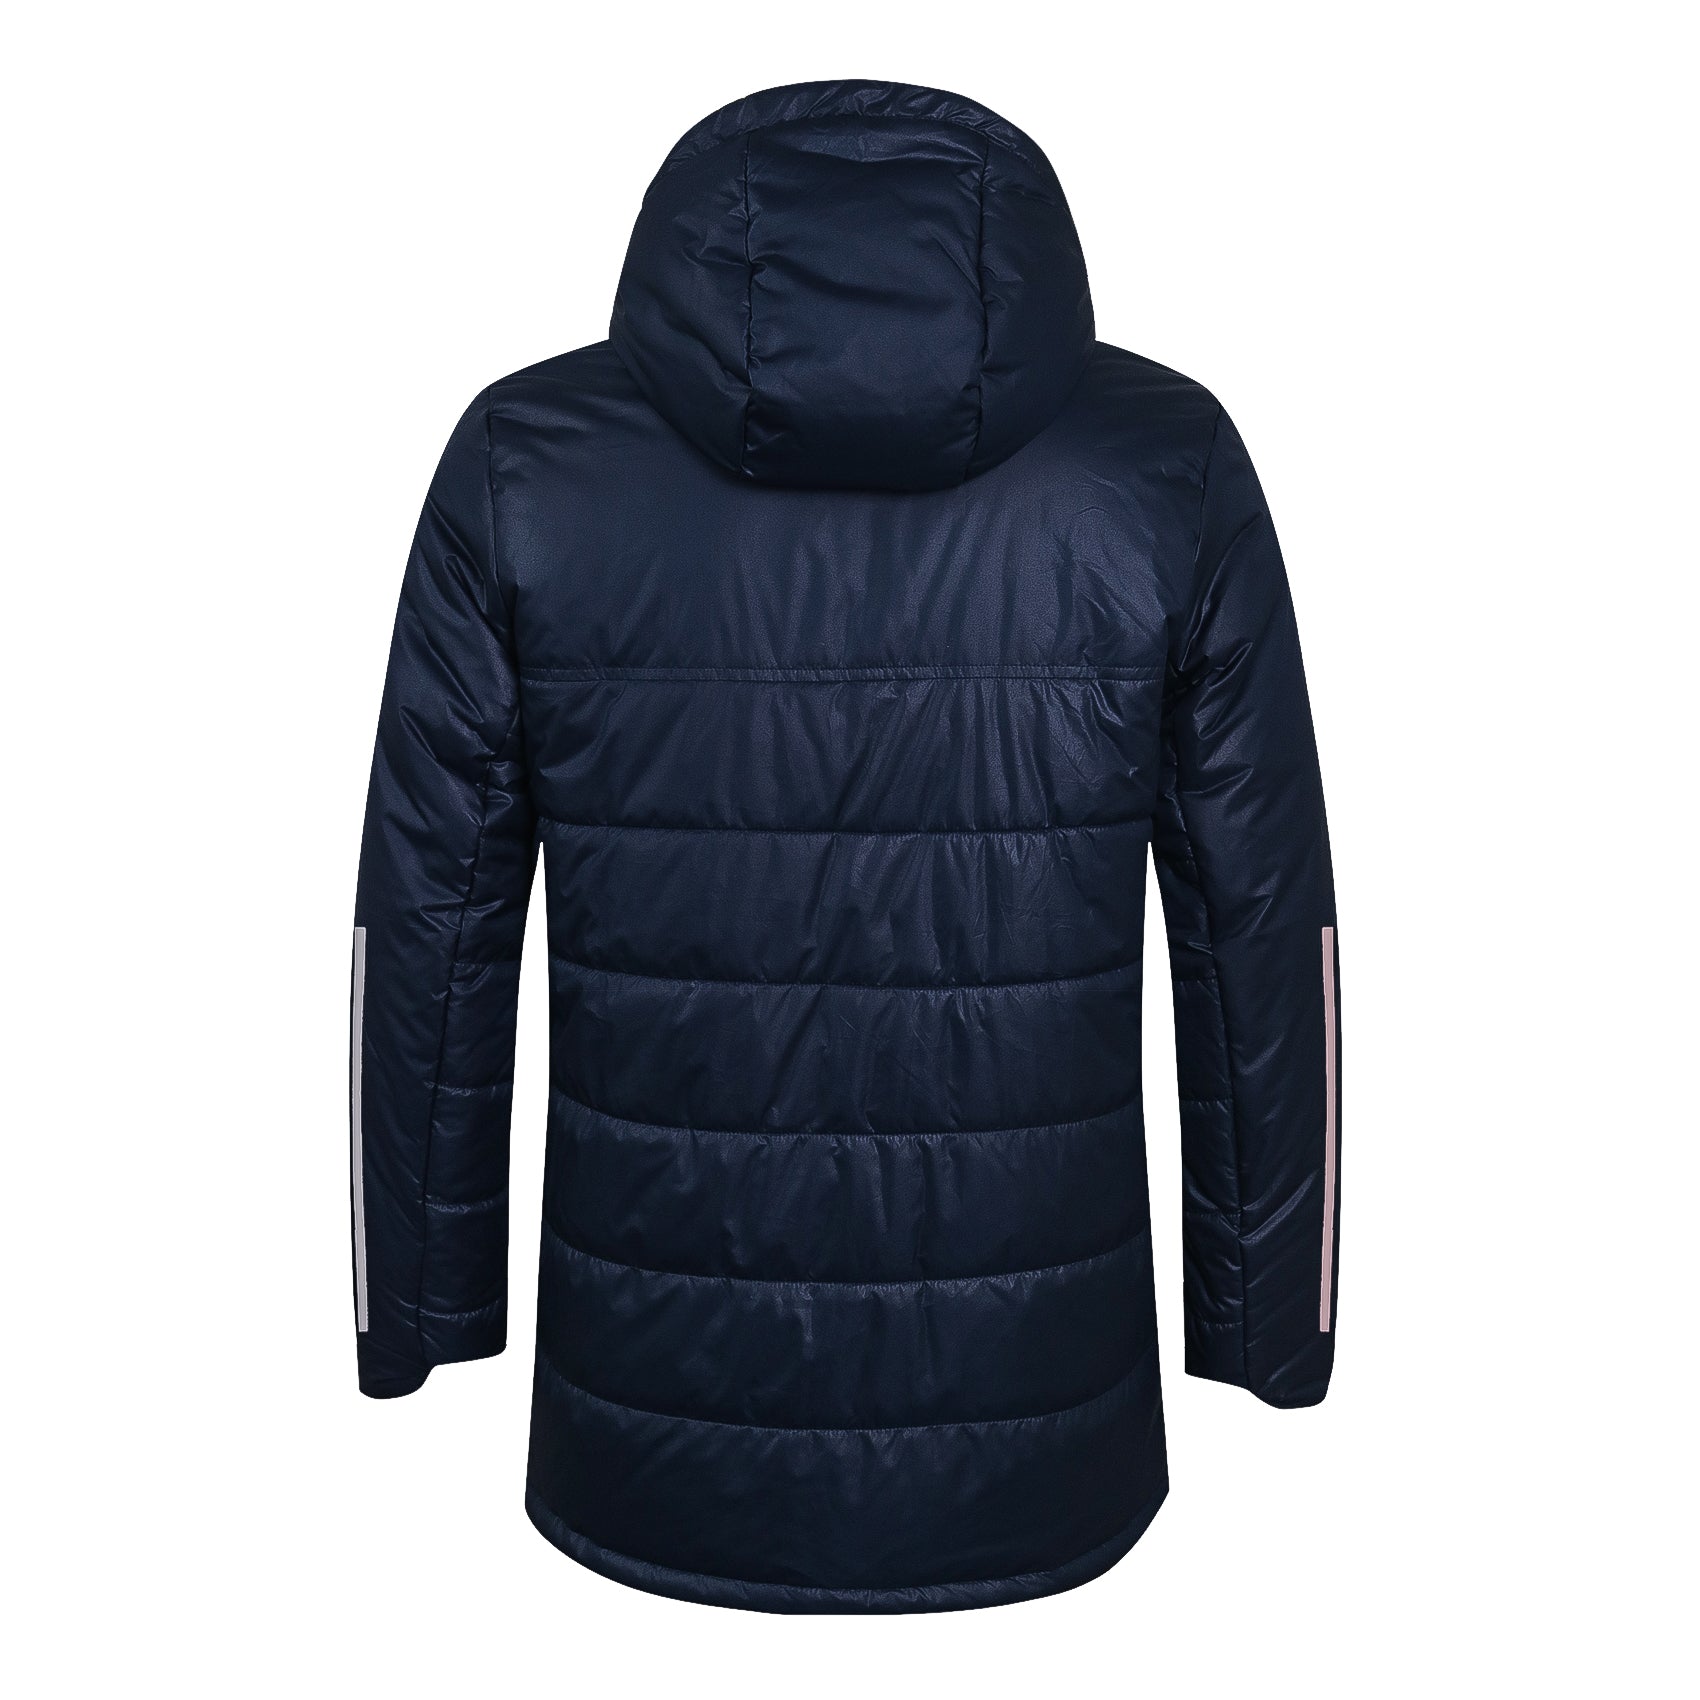 Jacket Adidas Black size L International in Polyester - 41298134